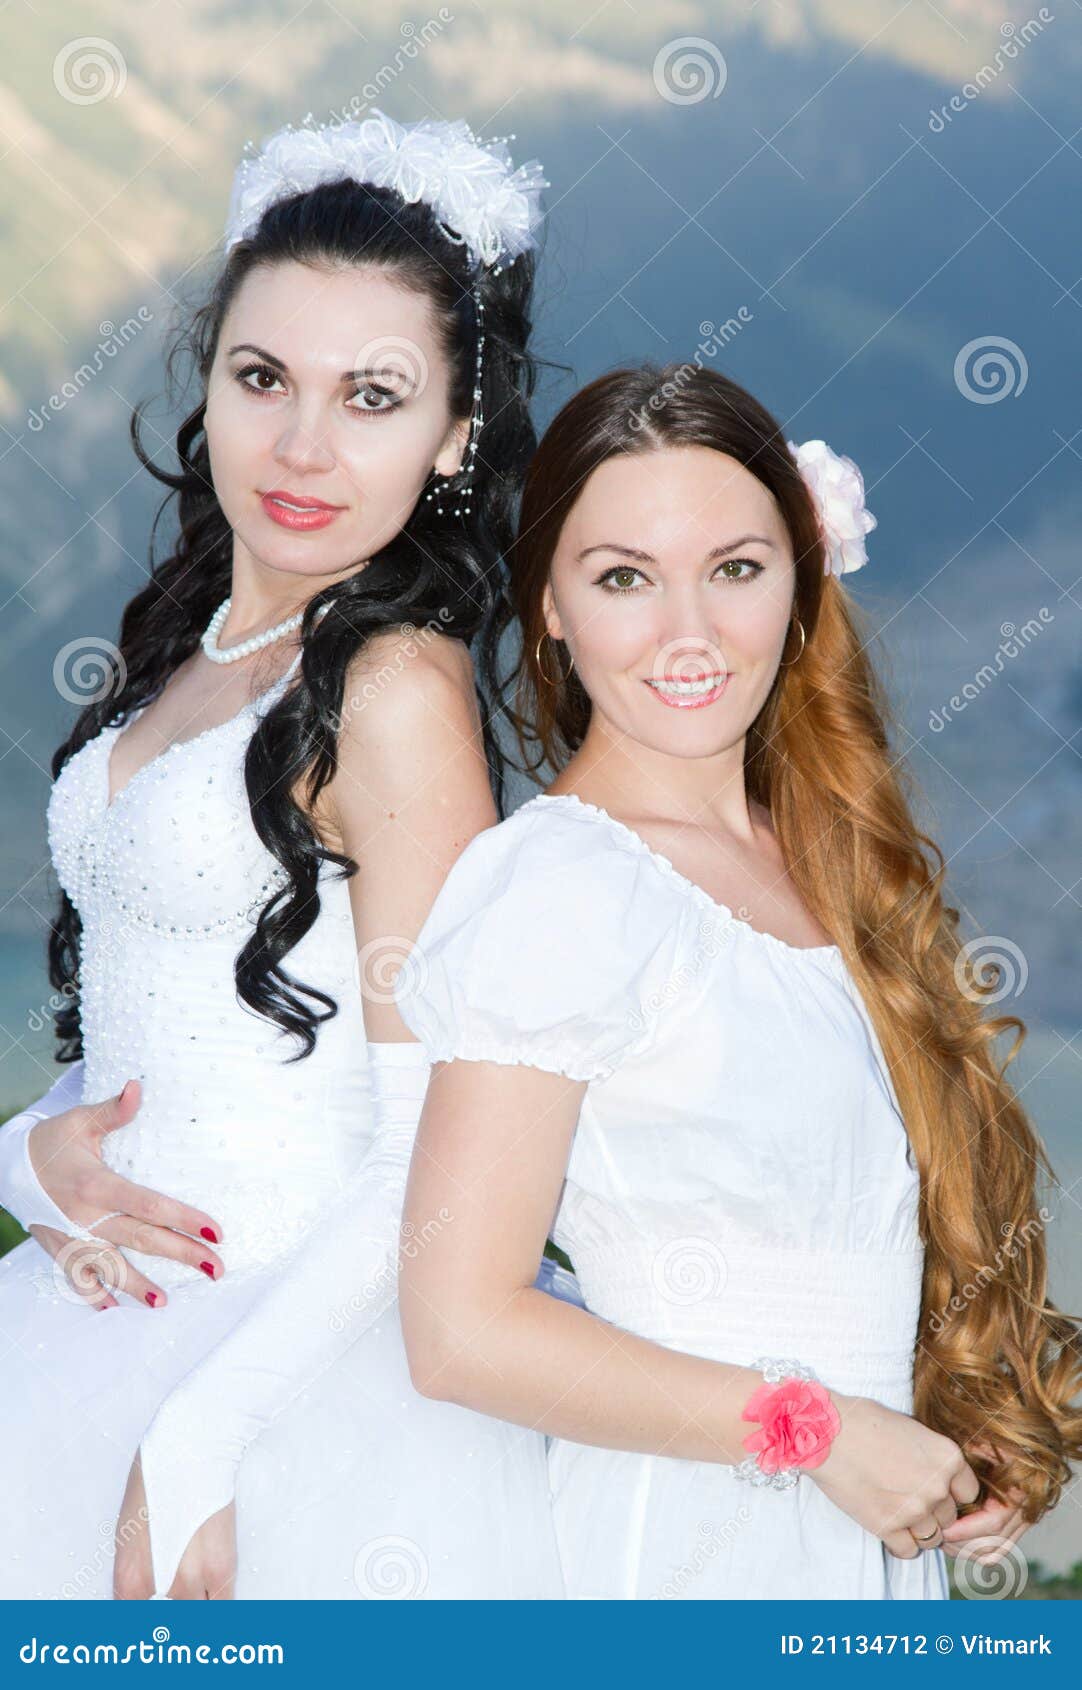 Russian photos brides of RUSSIAN WOMEN